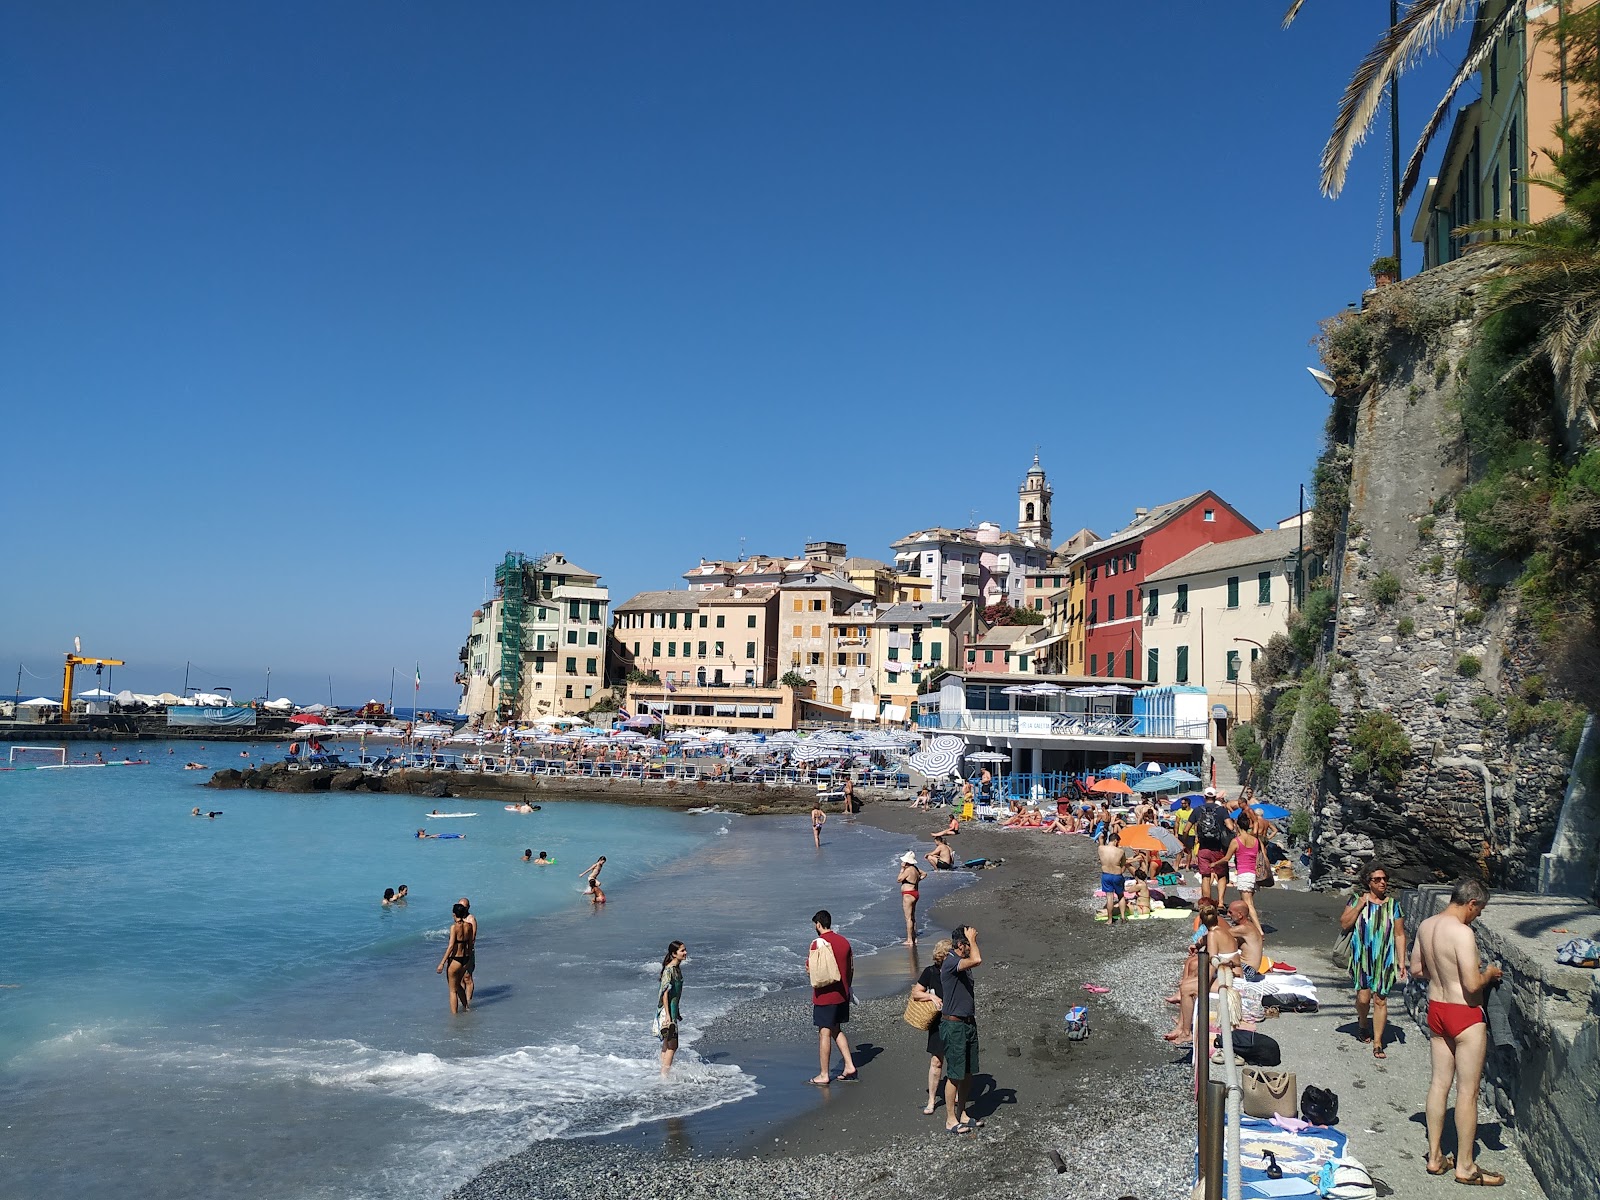 Spiaggia di Bogliasco的照片 带有蓝色纯水表面